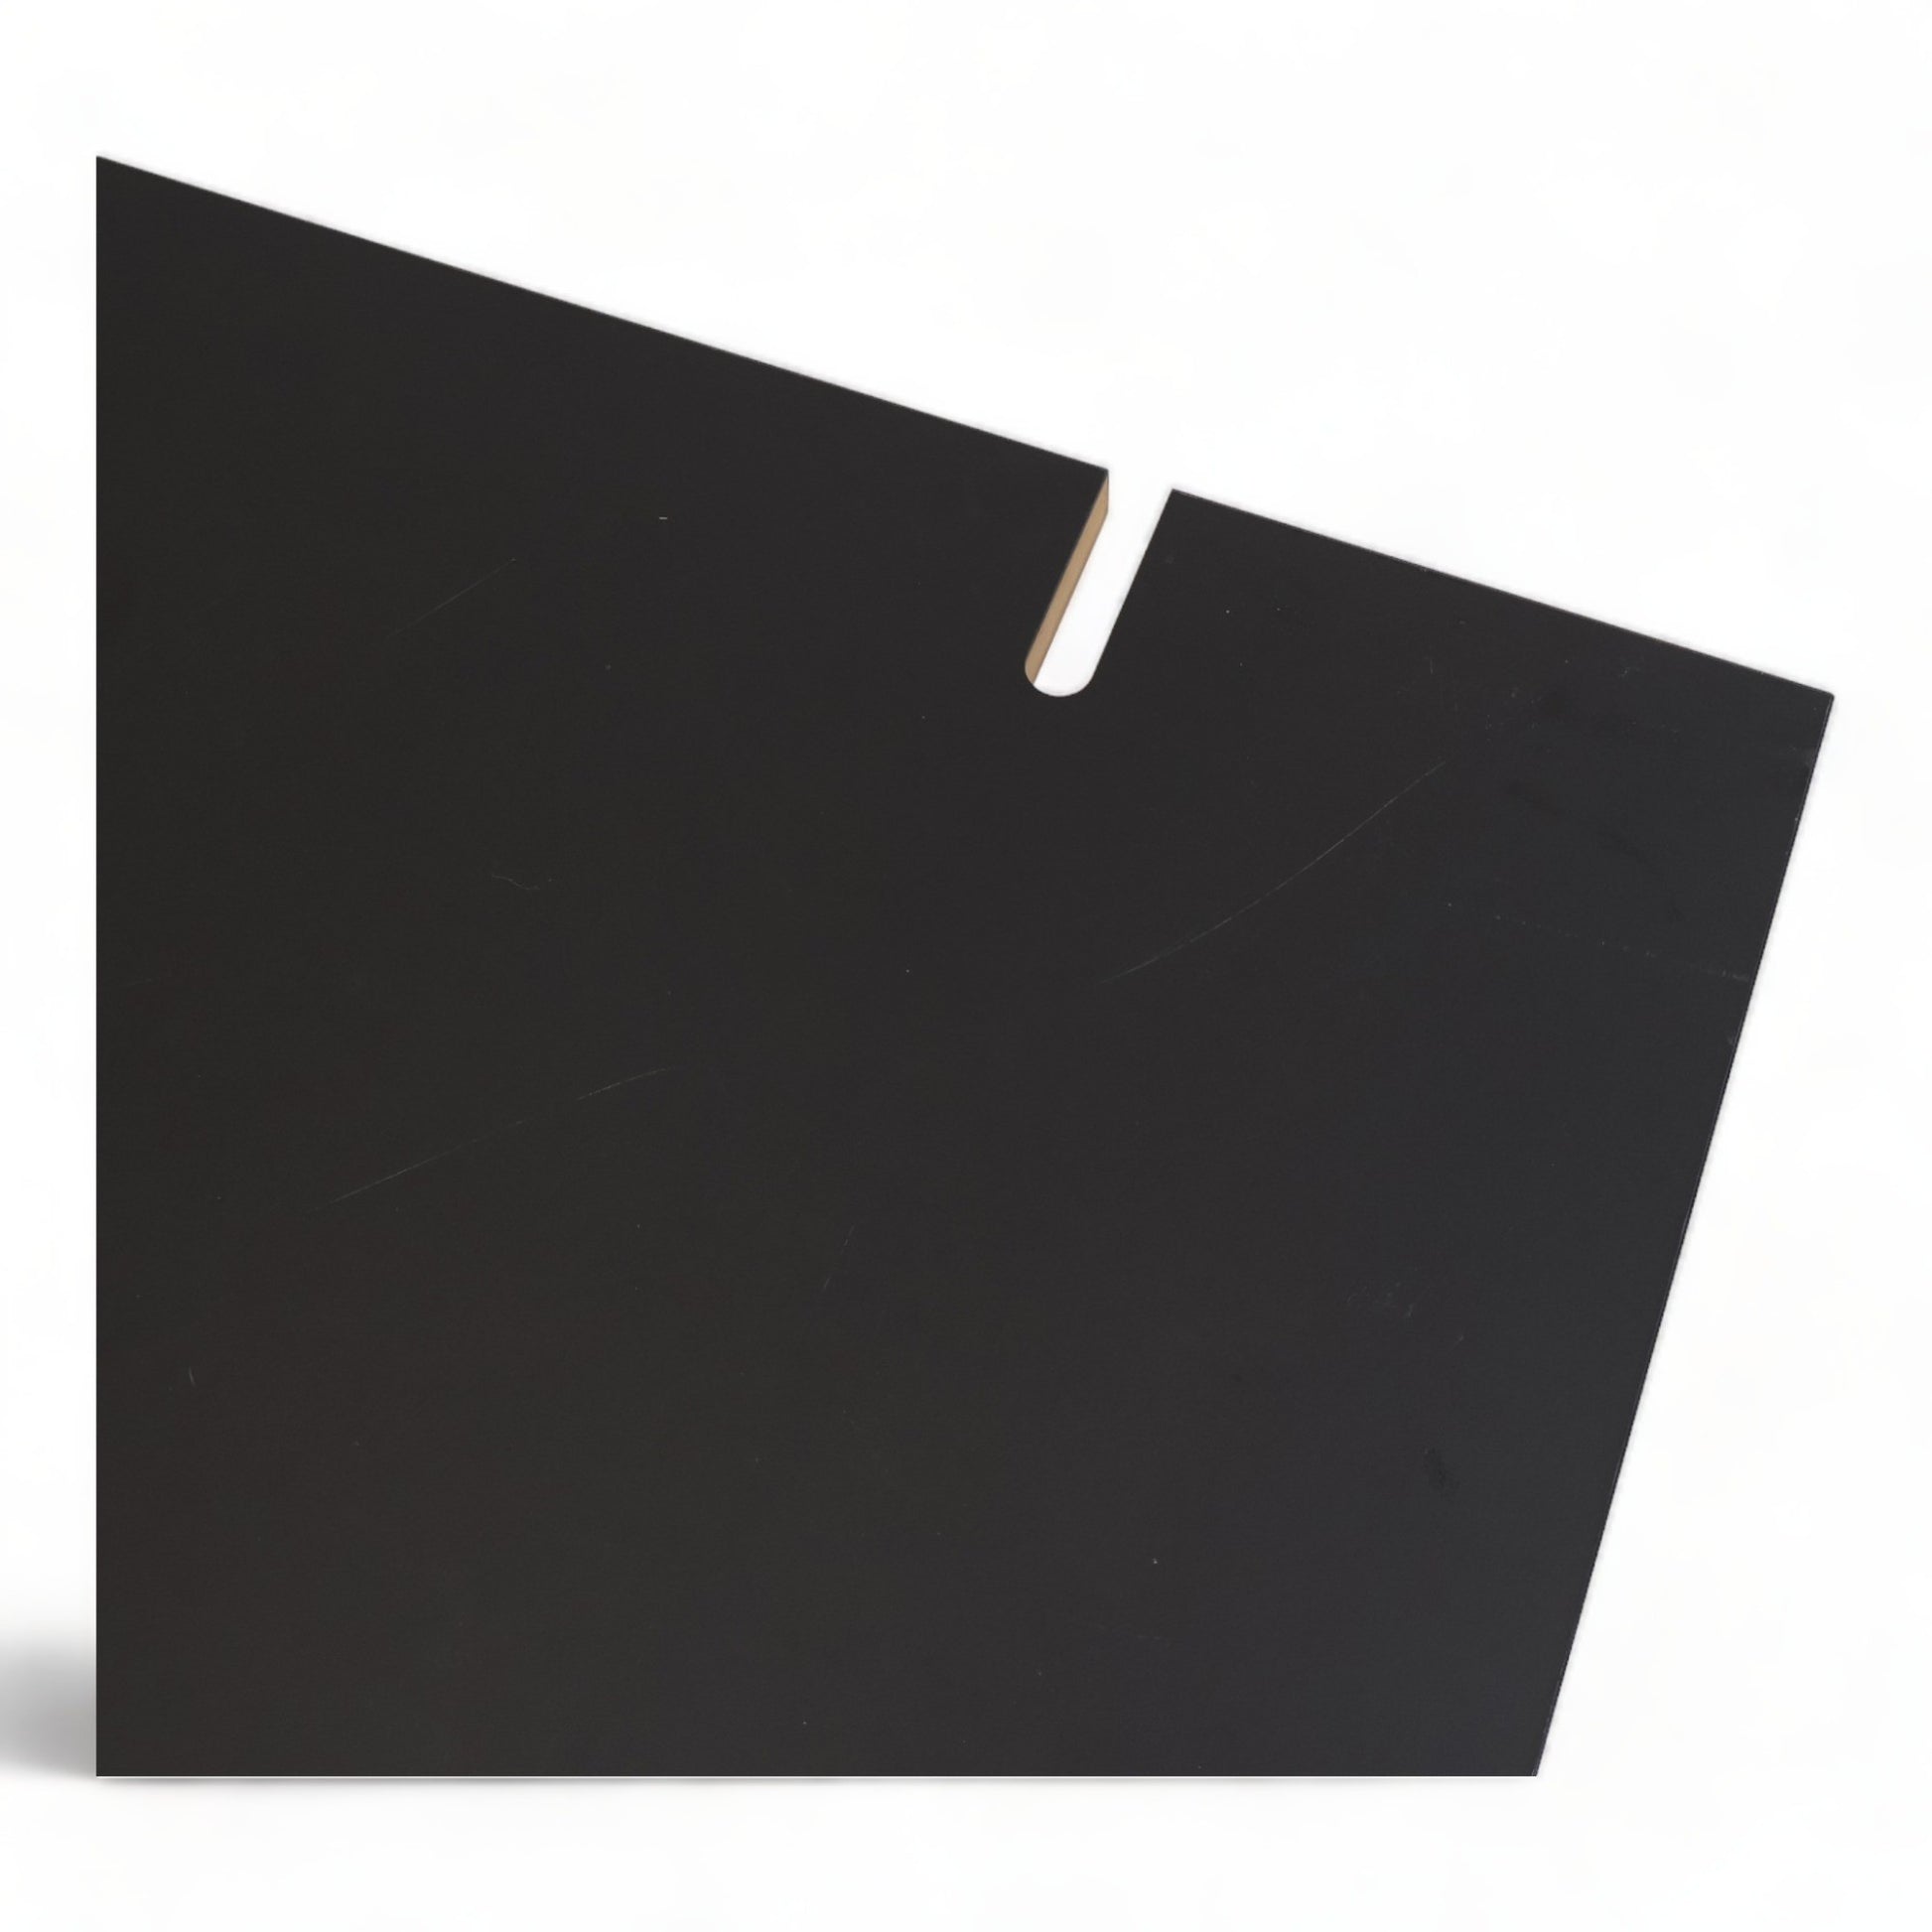 Kvalitetssikret | 140x70, enkelt skrivebord i fargen sort - Secundo